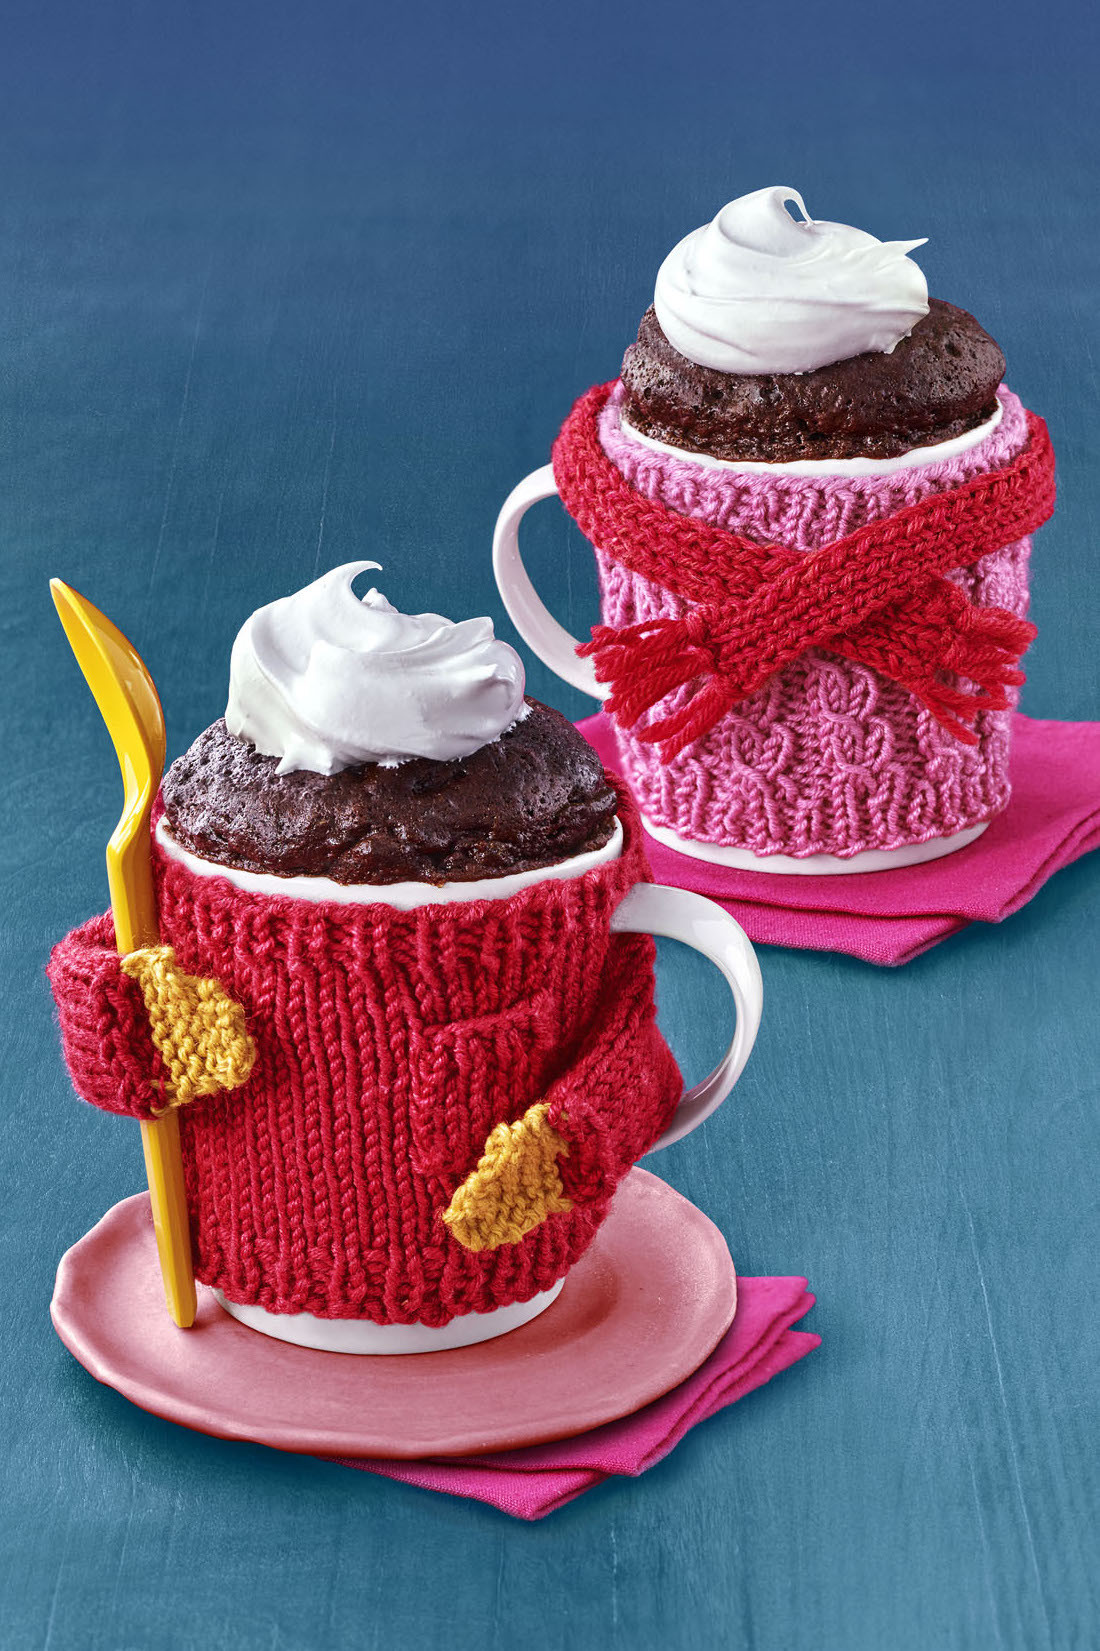 Microwave Cupcakes In A Mug
 Best Microwave Mug Cake Recipe How to Make Microwave Mug